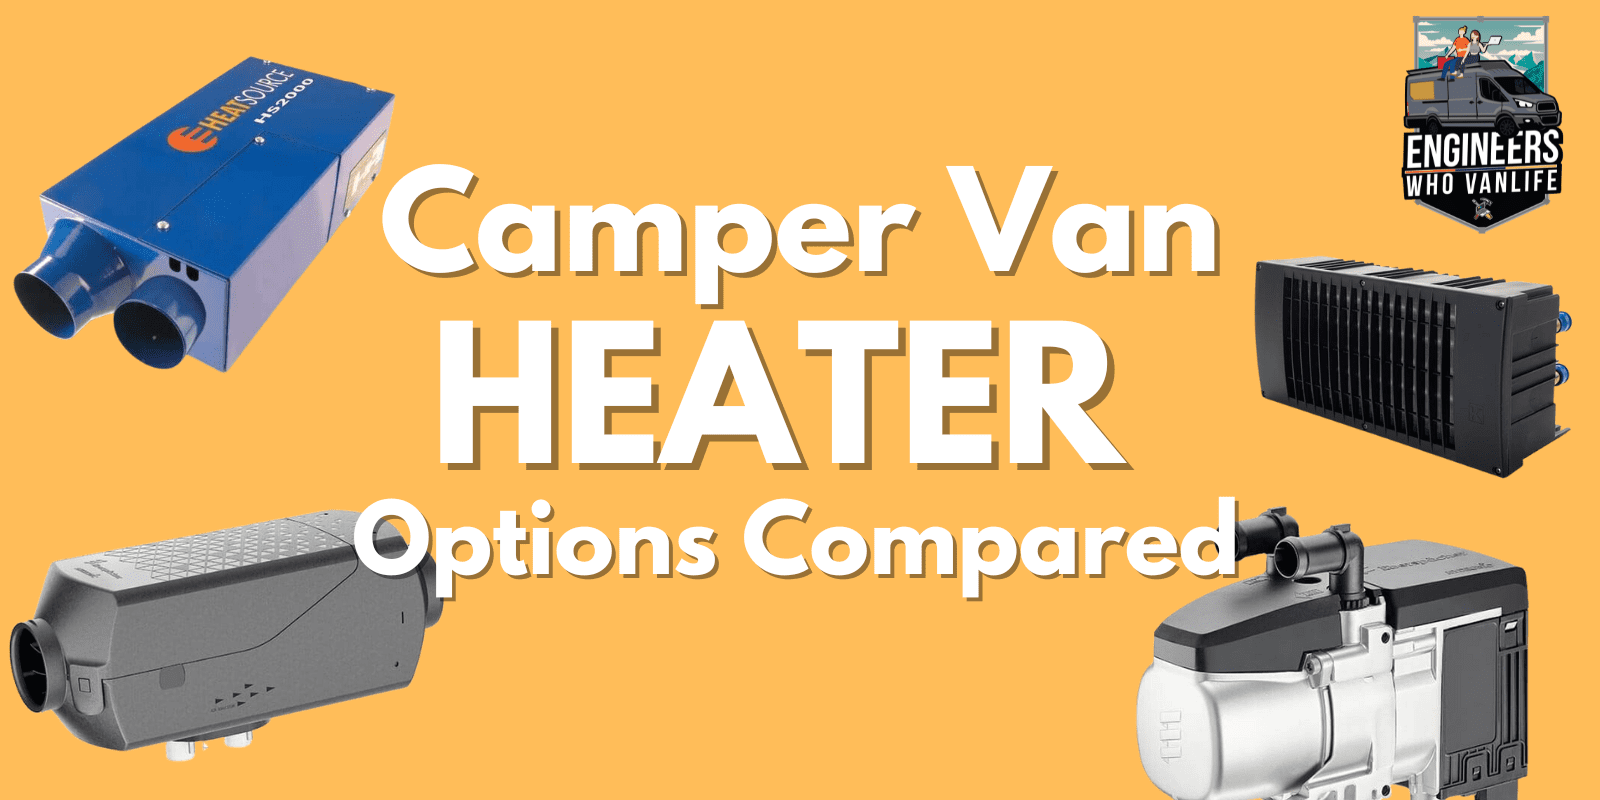 How To Install a Webasto Gasoline Heater In Camper Van